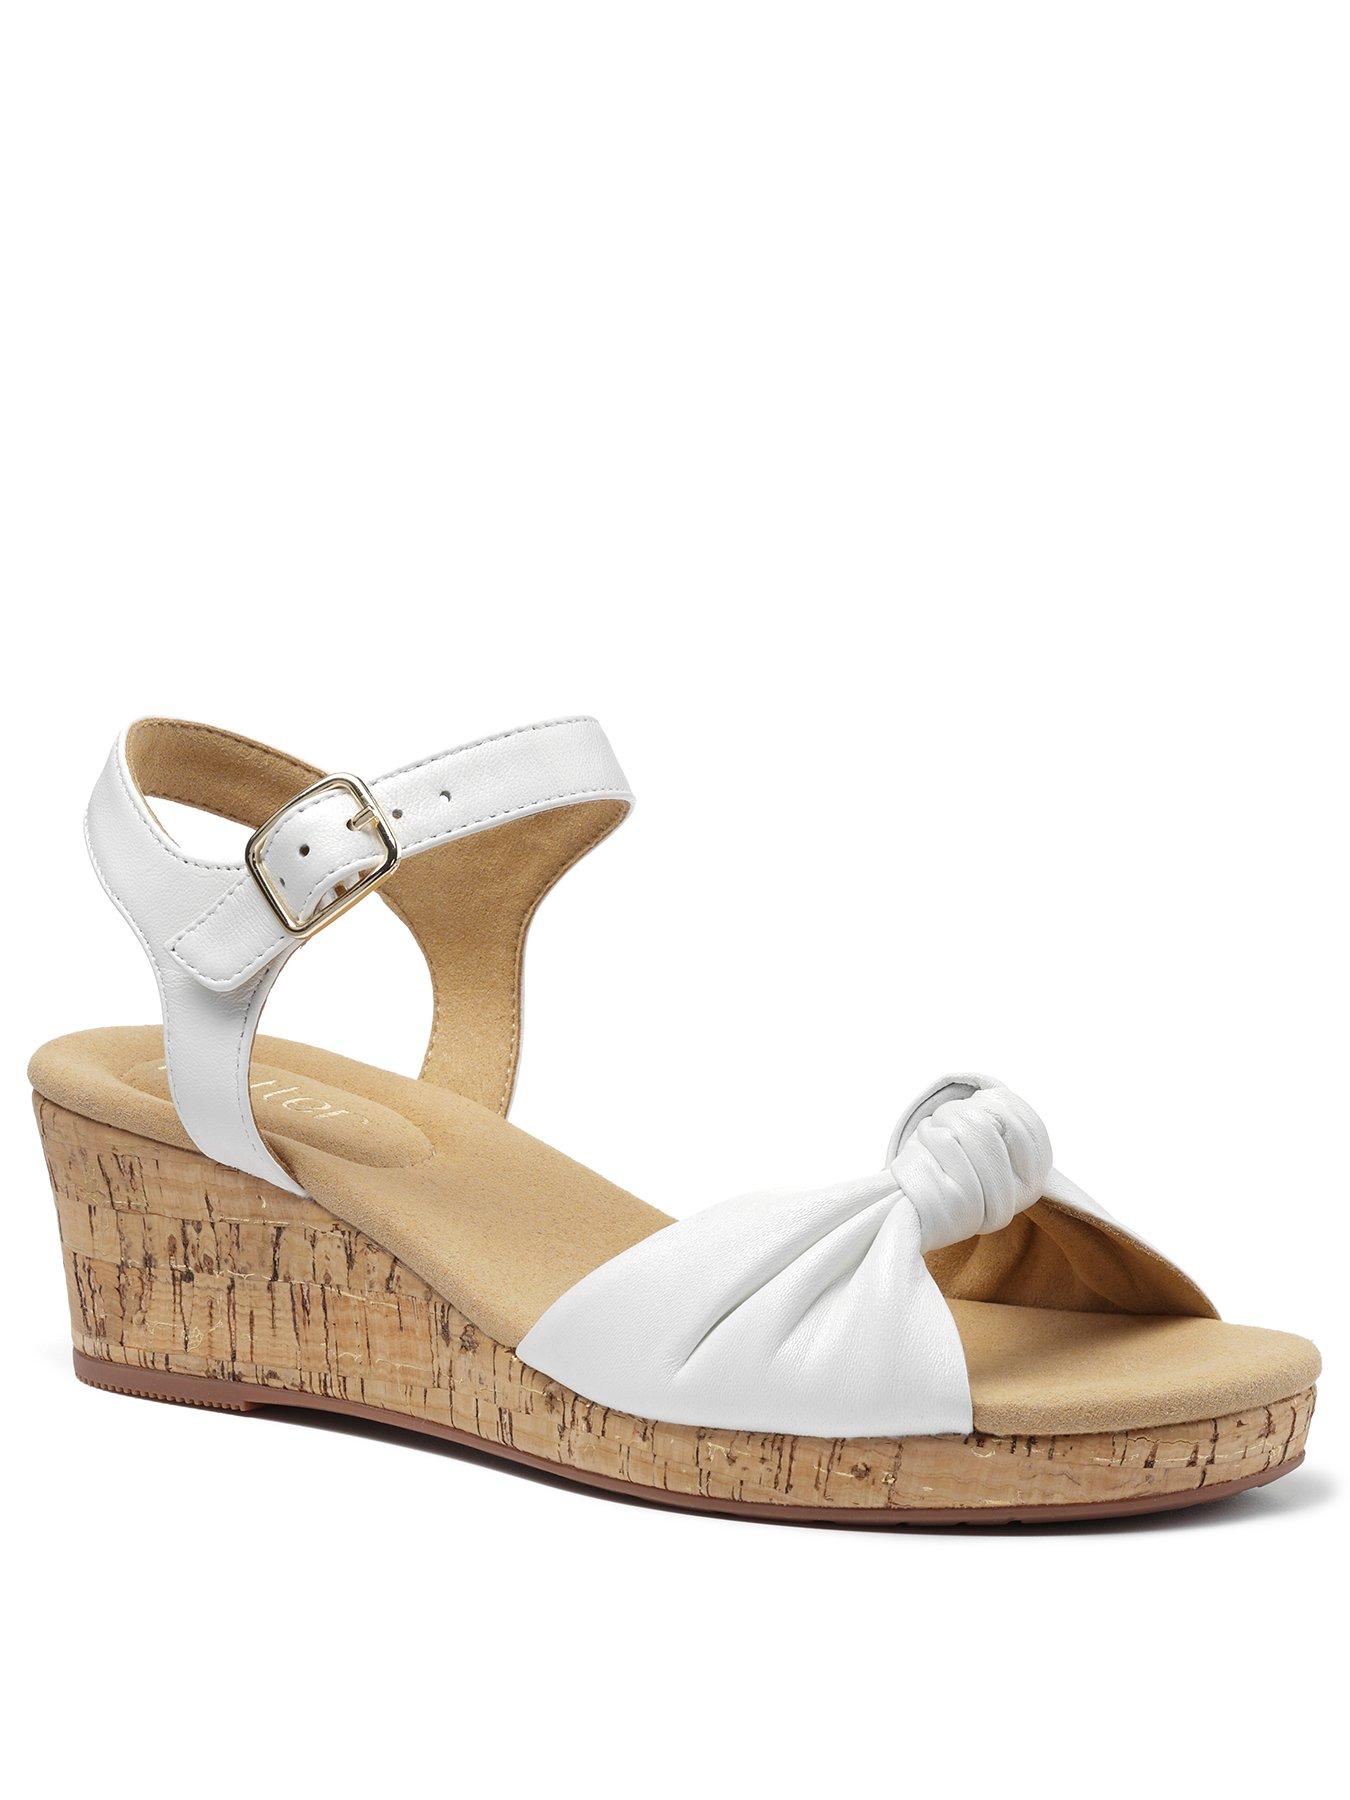 white heels ireland